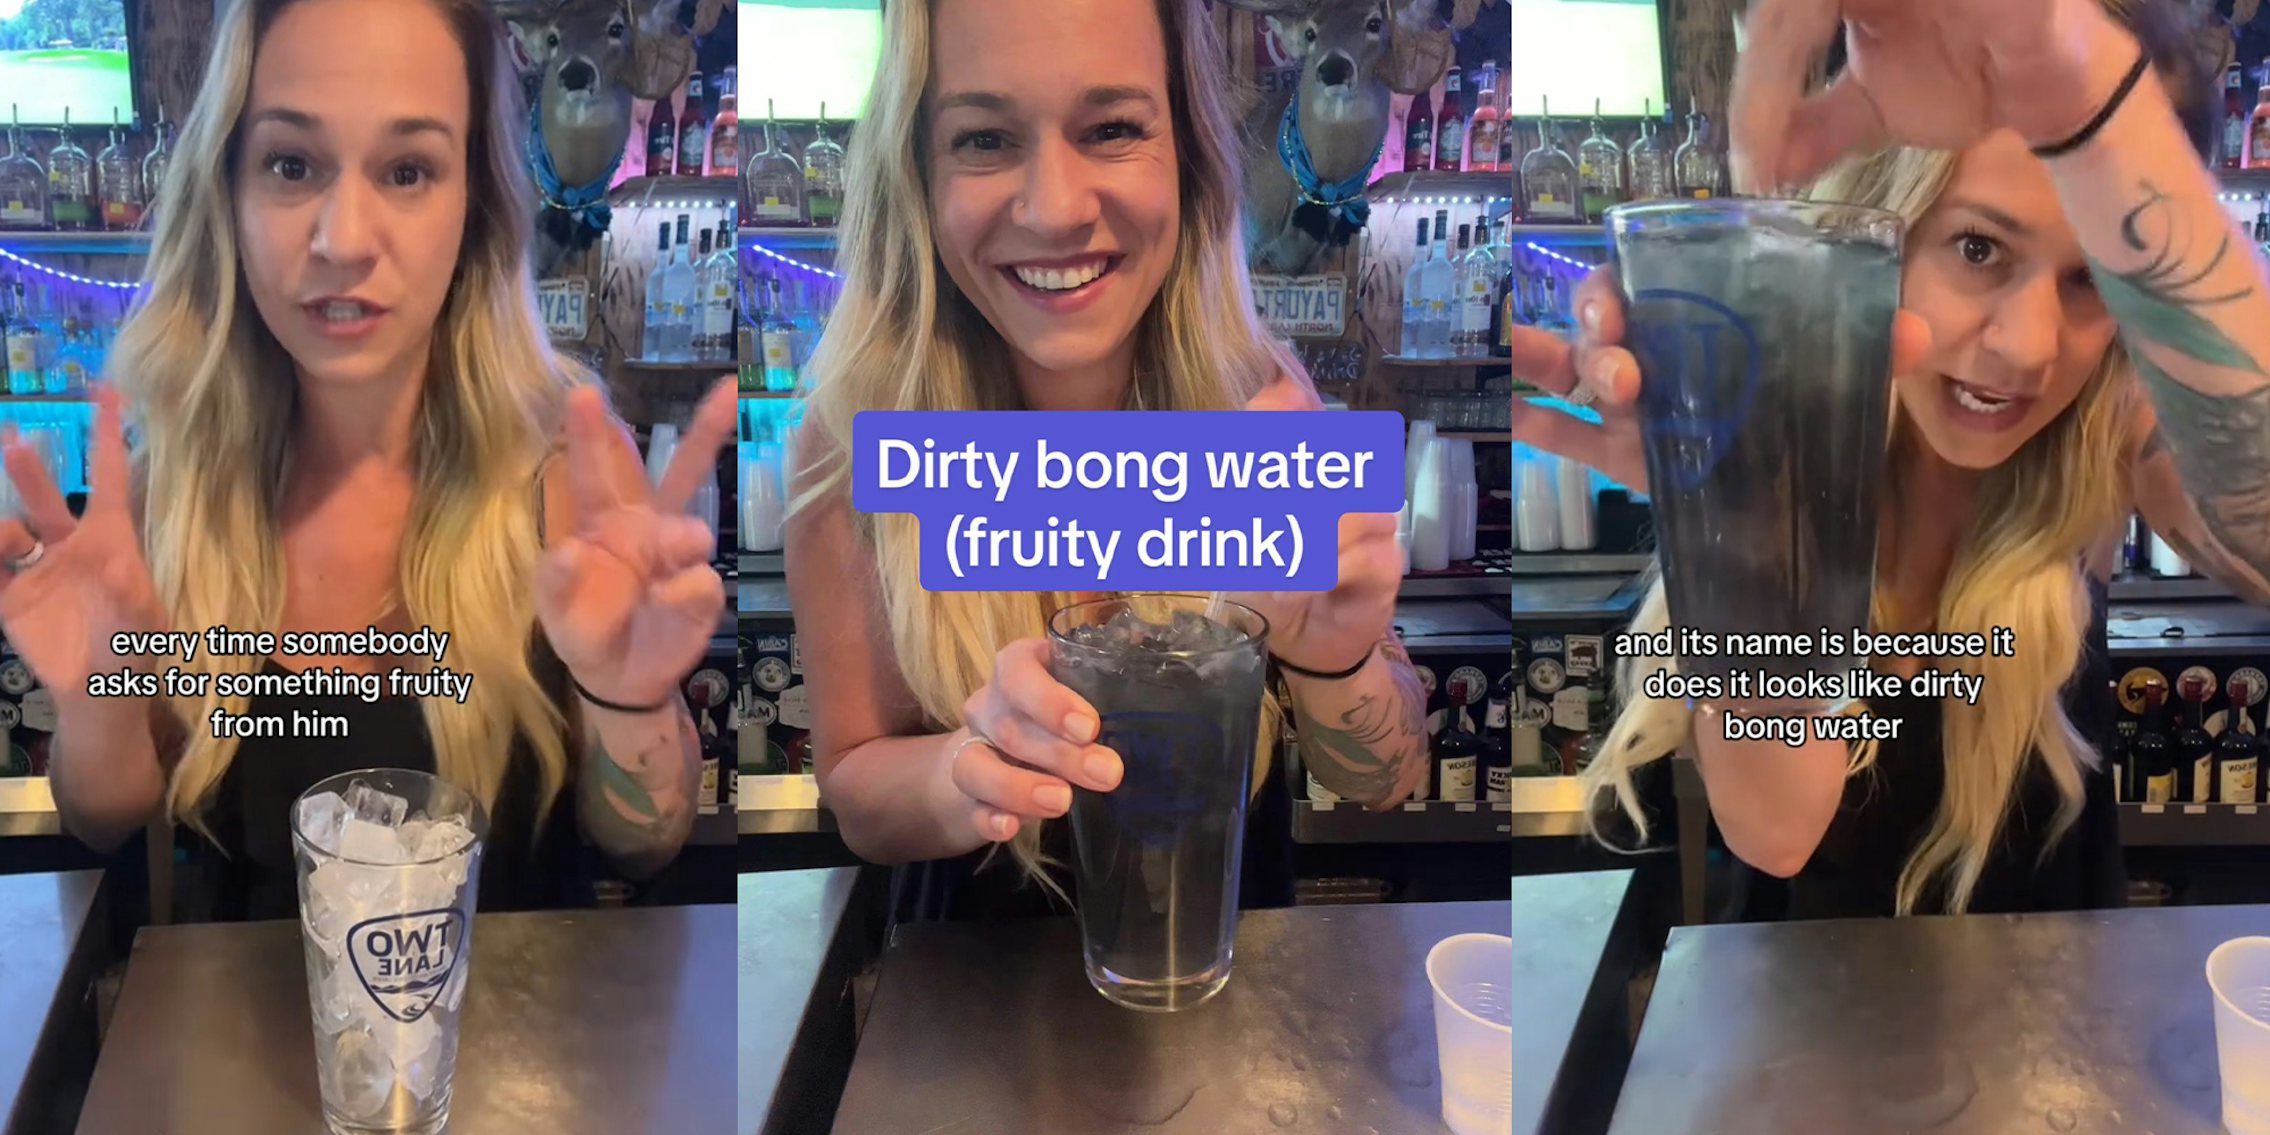 Bartender shares what she makes when customer asks for something fruity